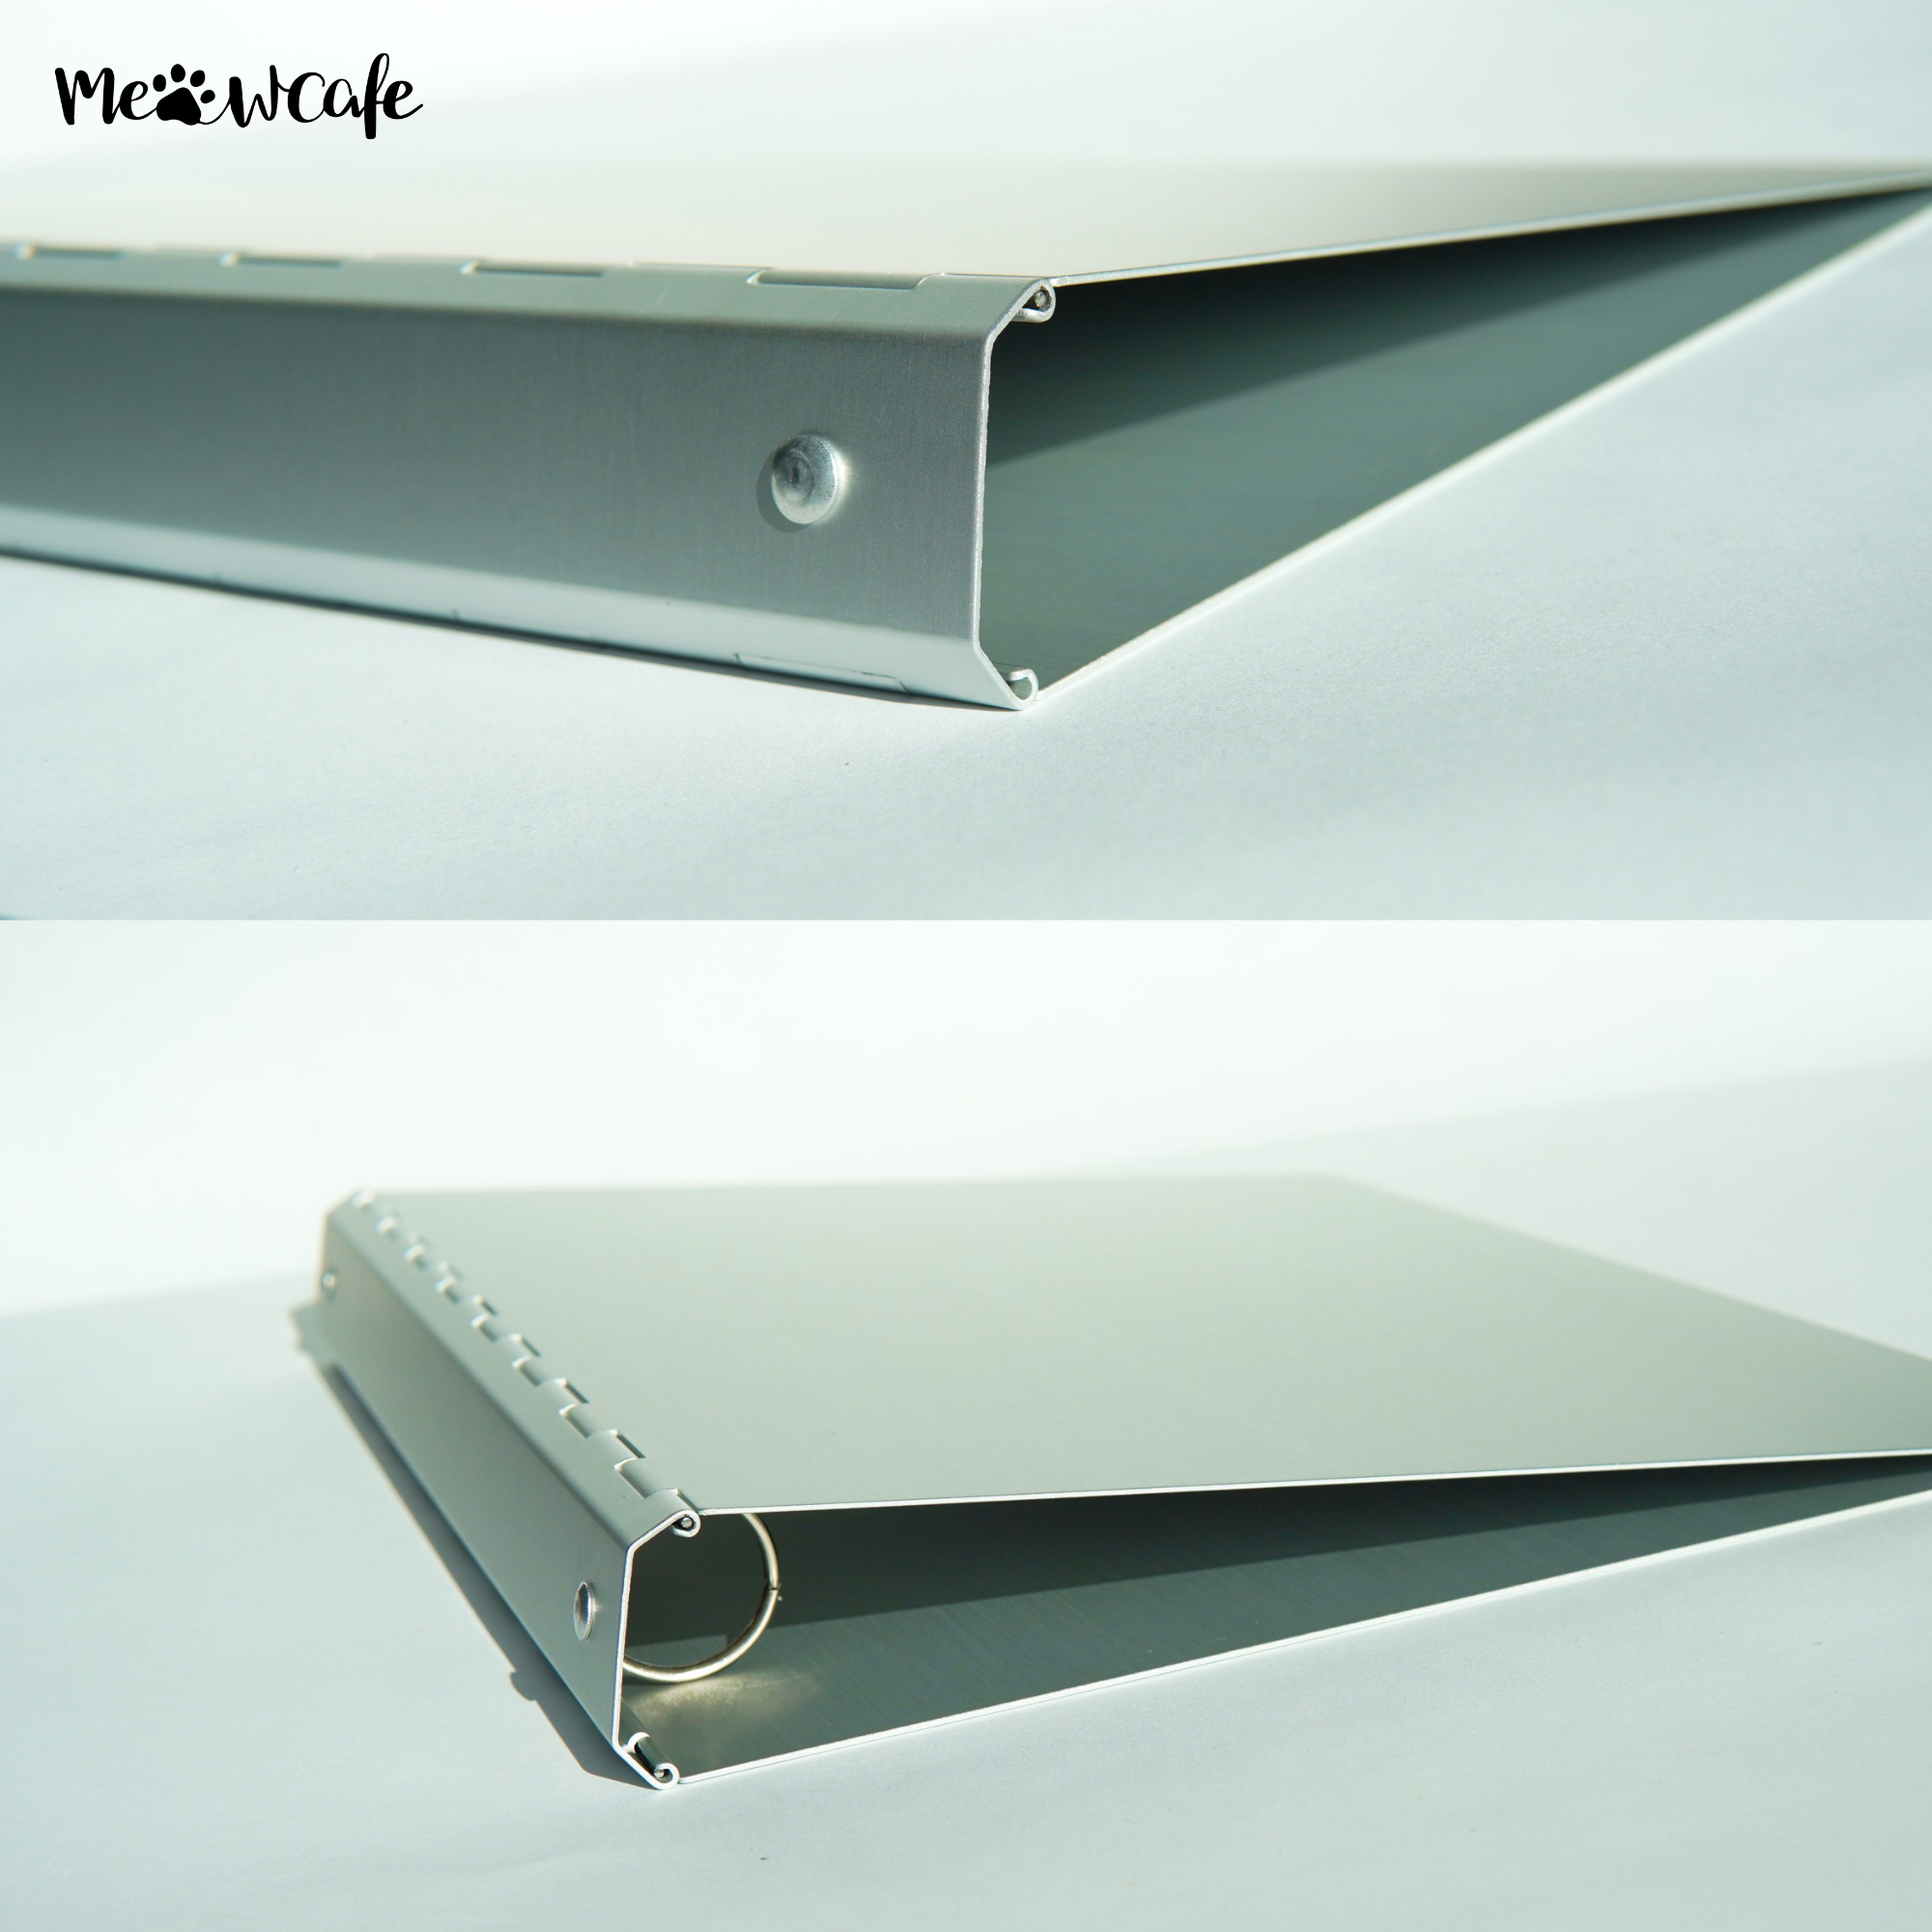 Meowcafe [A4 Slim] Aluminum Binder - [Aluminum Series] - OT7/OT8/OT9 "Bulletproof" Photocard Binder